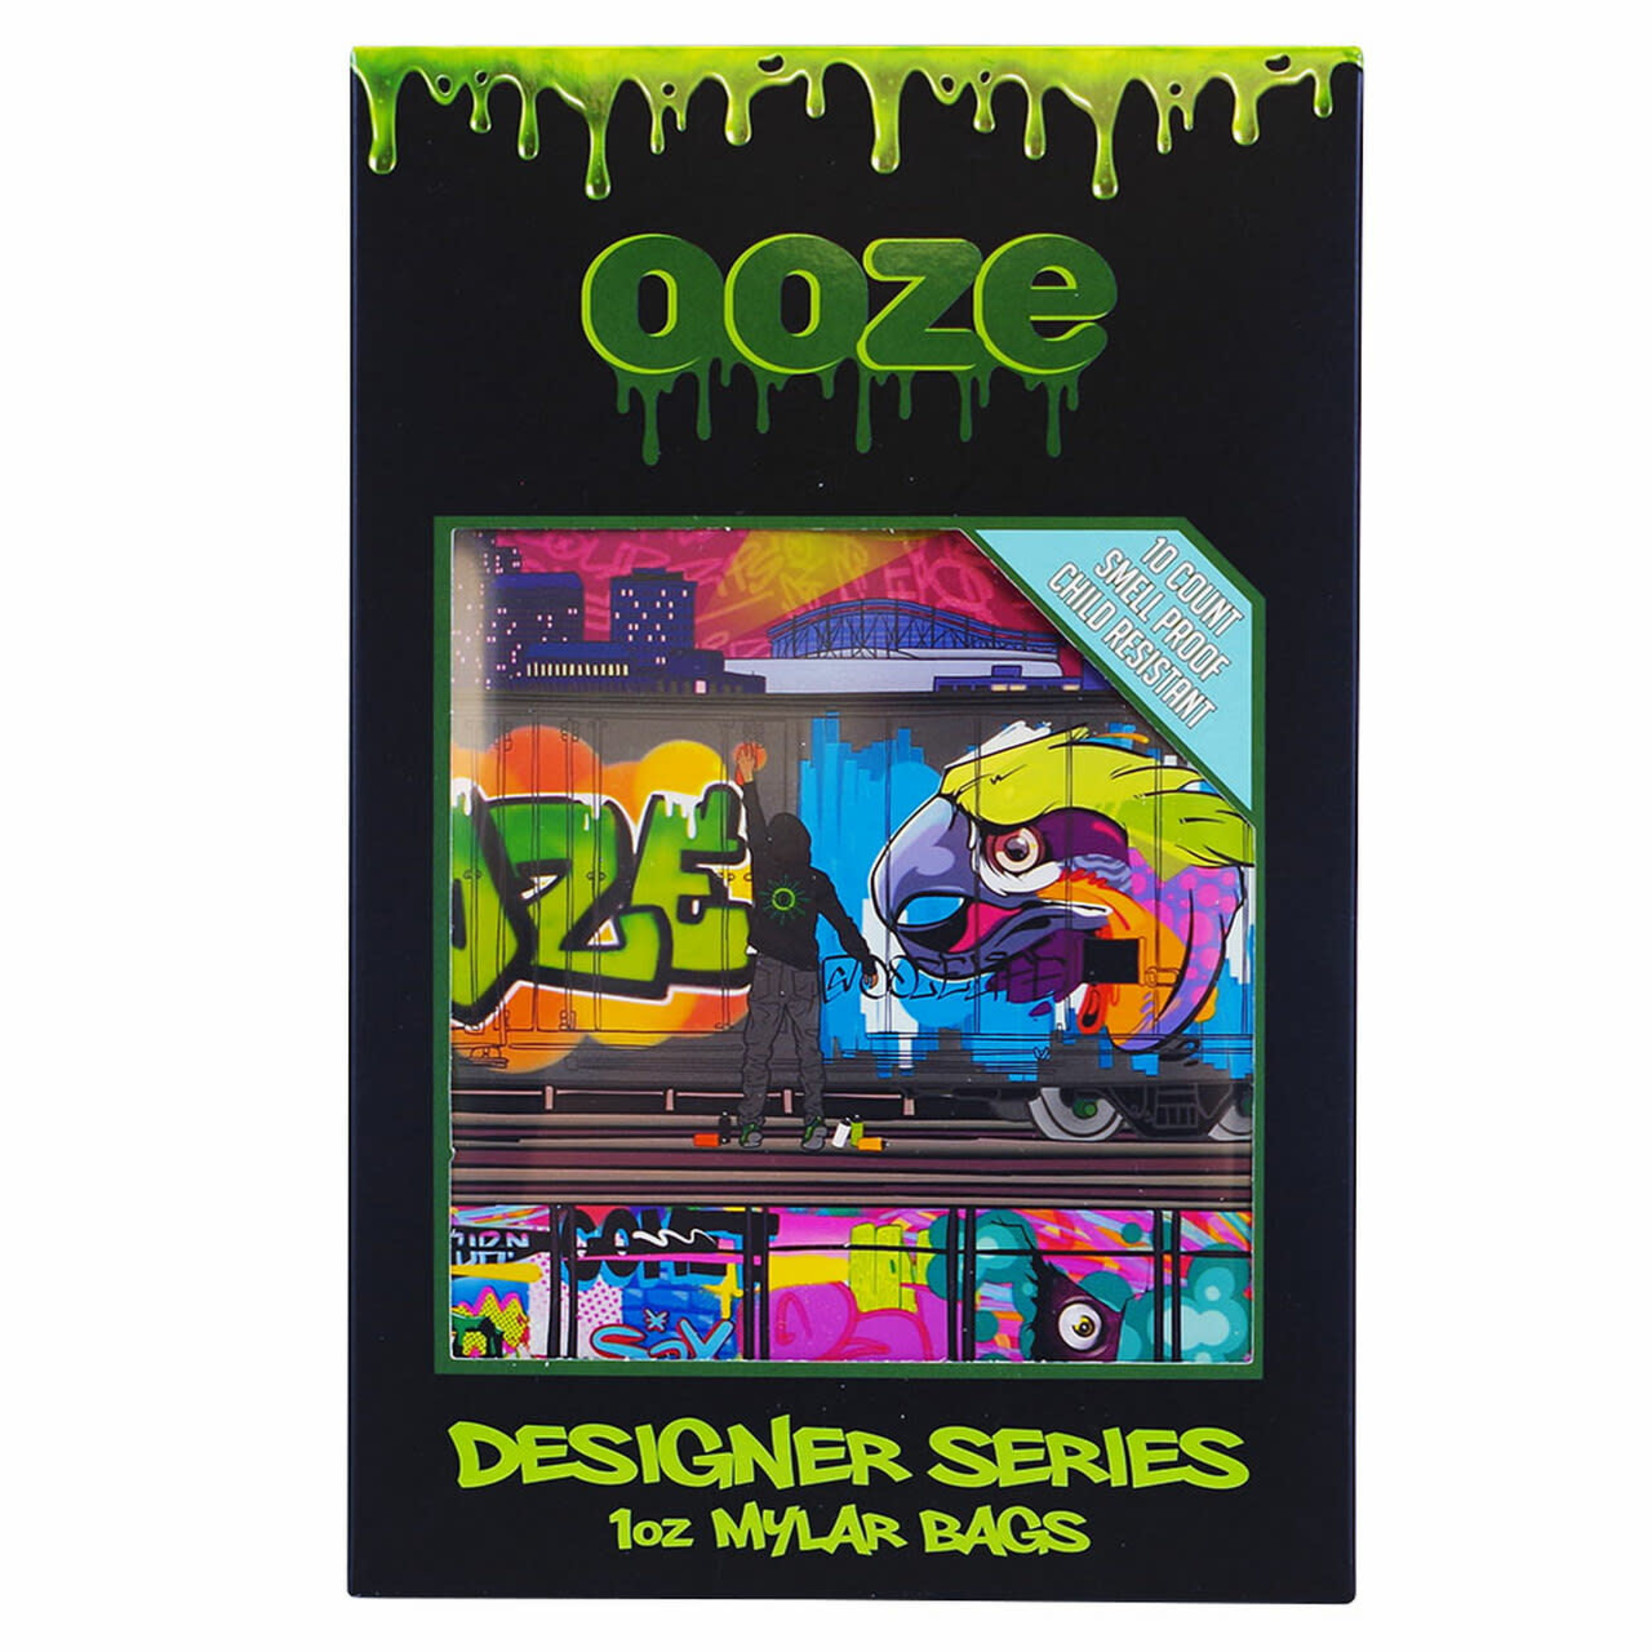 Ooze Ooze Designer Mylar Bags - Graffiti